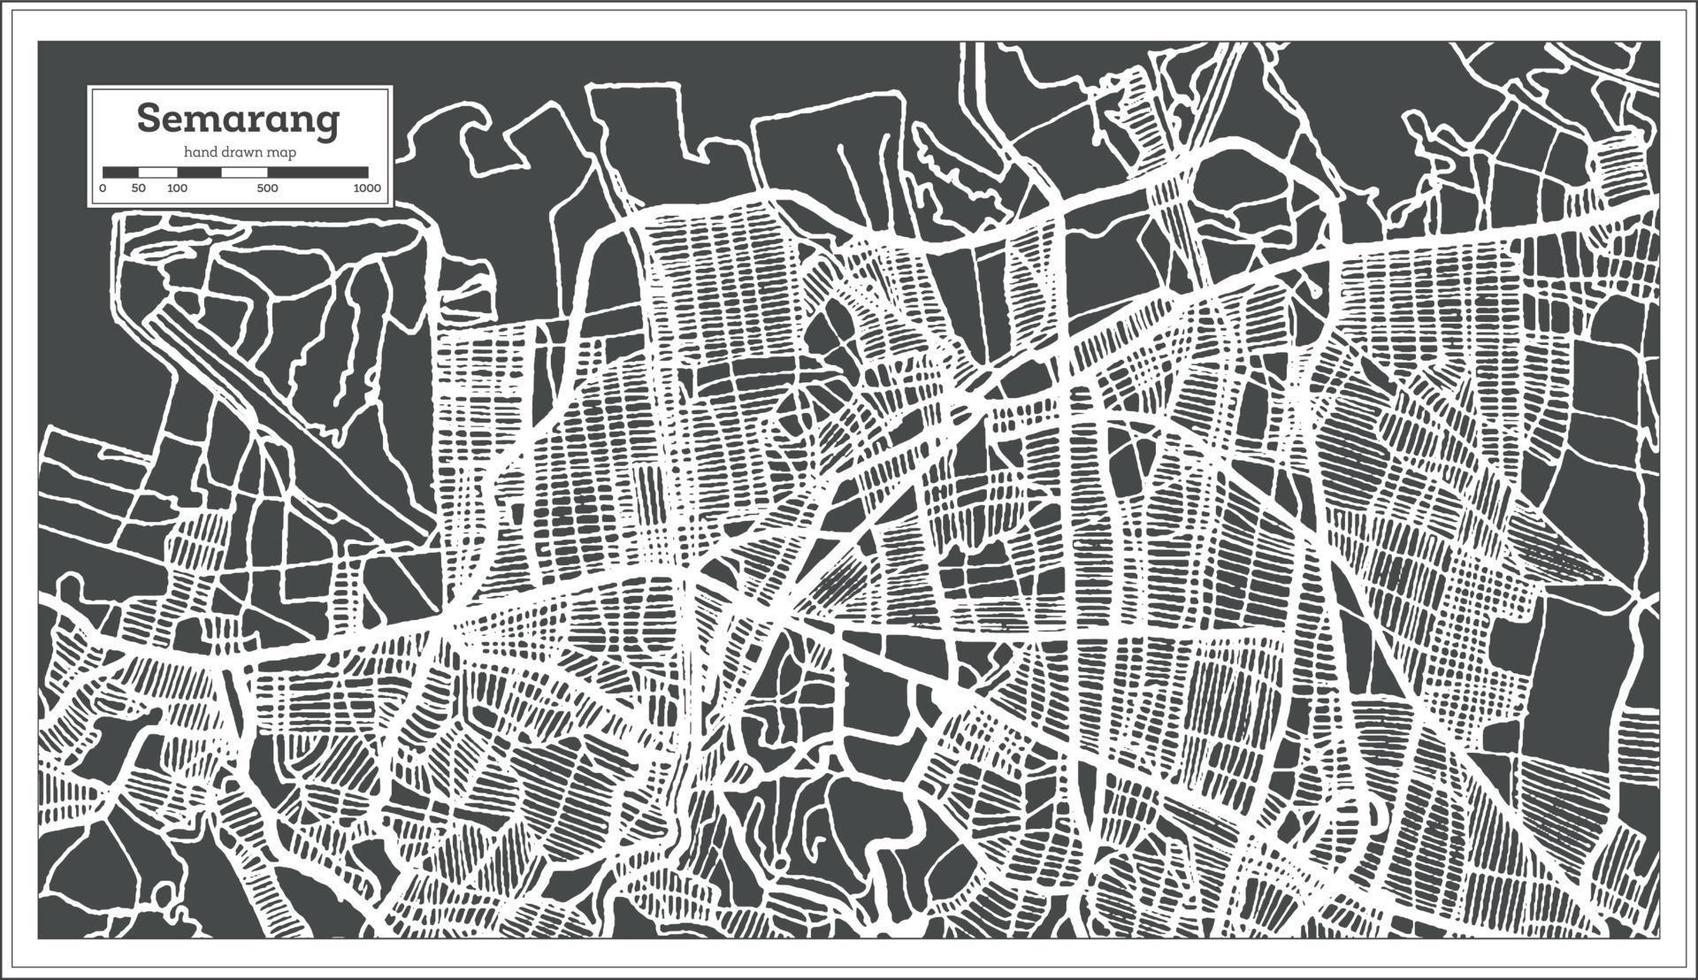 semarang Indonesia città carta geografica nel retrò stile. schema carta geografica. vettore